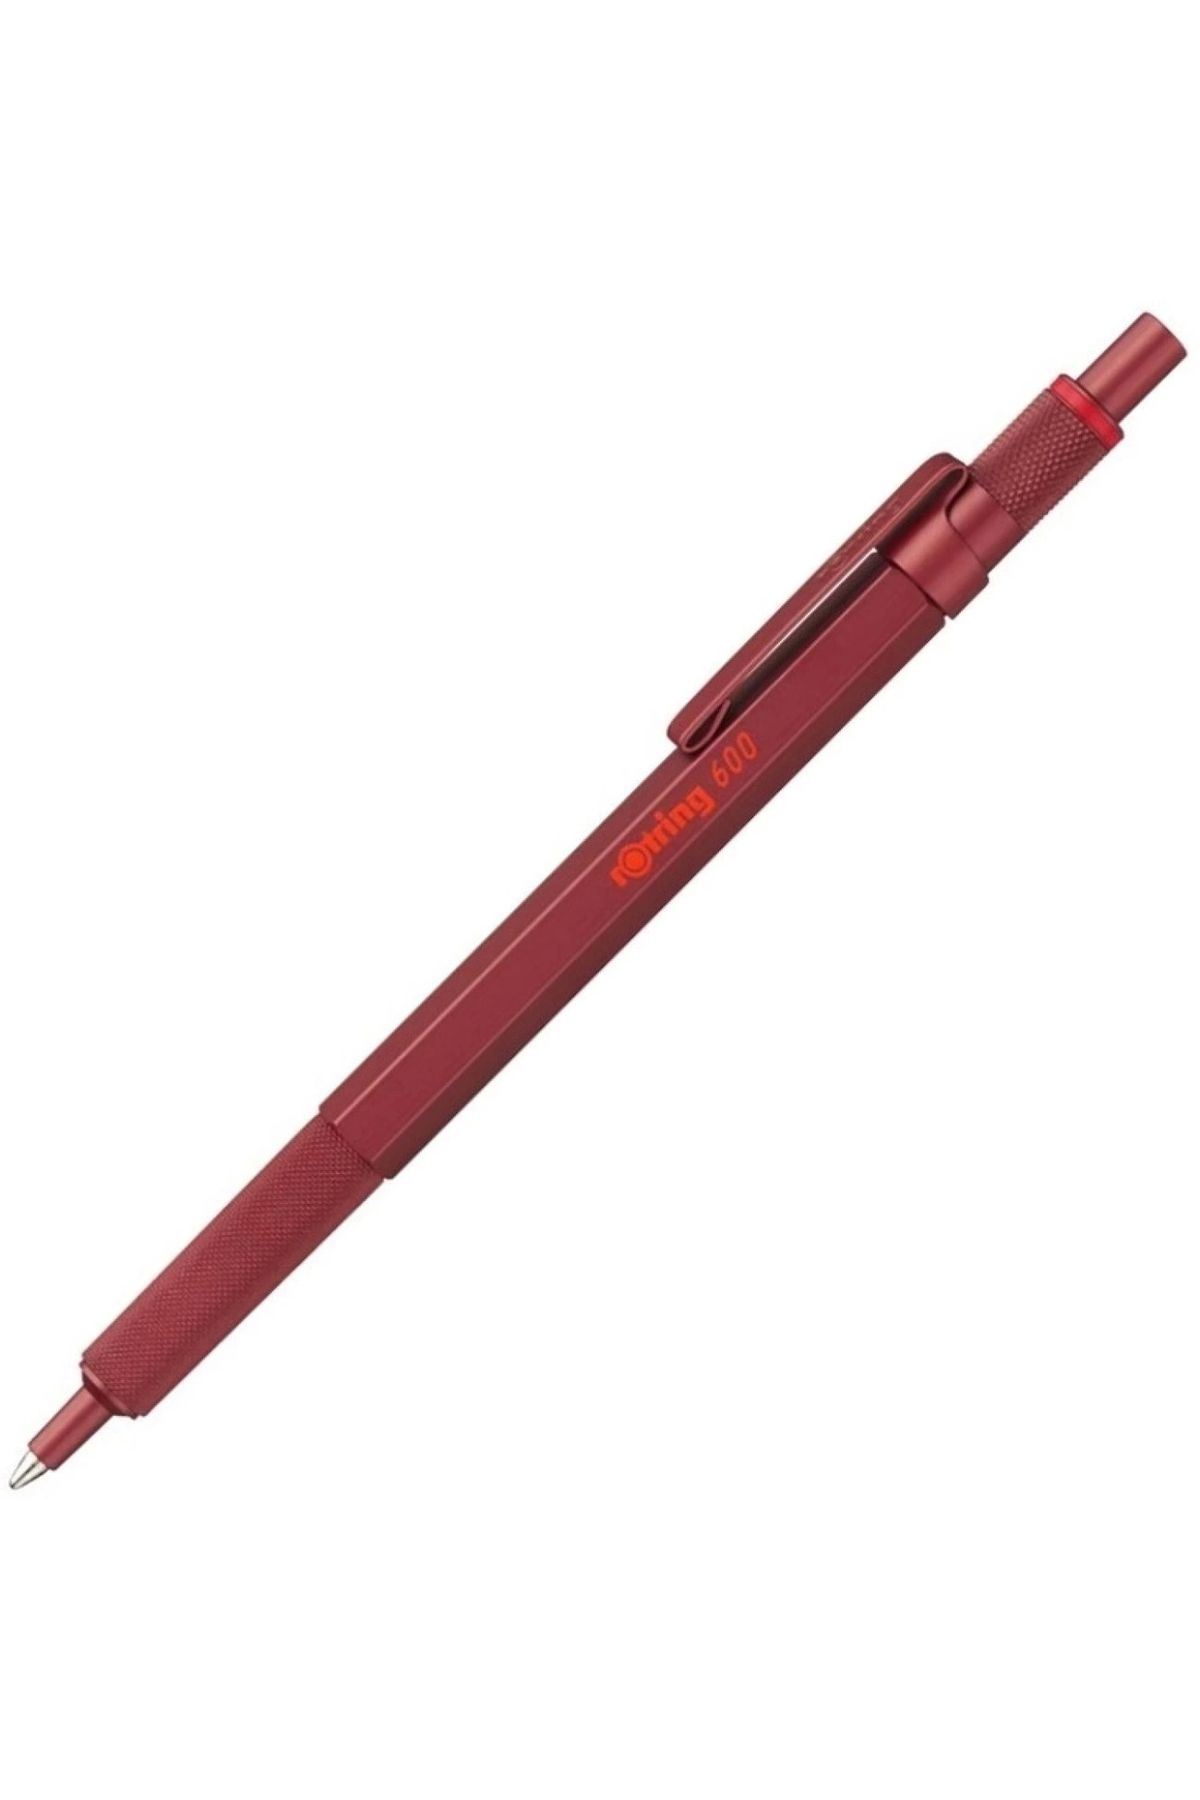 Rotring Marka: 600 Tükenmez Kalem, Kırmızı Kategori: Tükenmez Kalemler